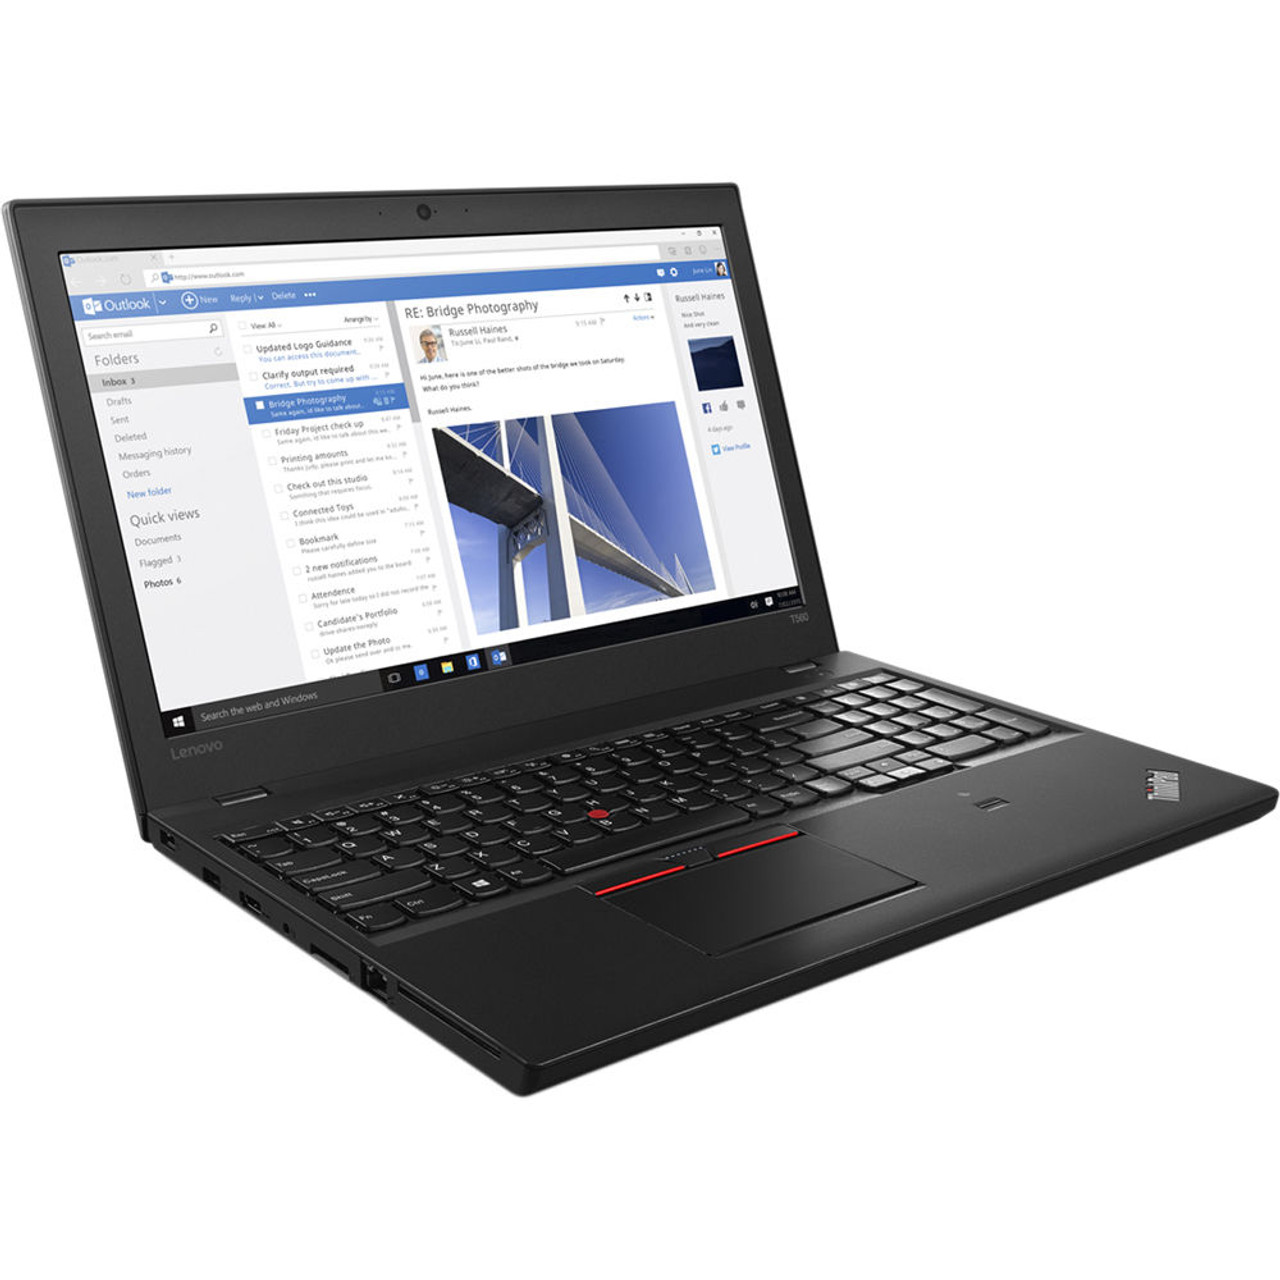 Lenovo Thinkpad T560 15.6" Laptop Intel Core i7 2.60 GHz 8 GB 256 GB SSD W10P | Refurbished